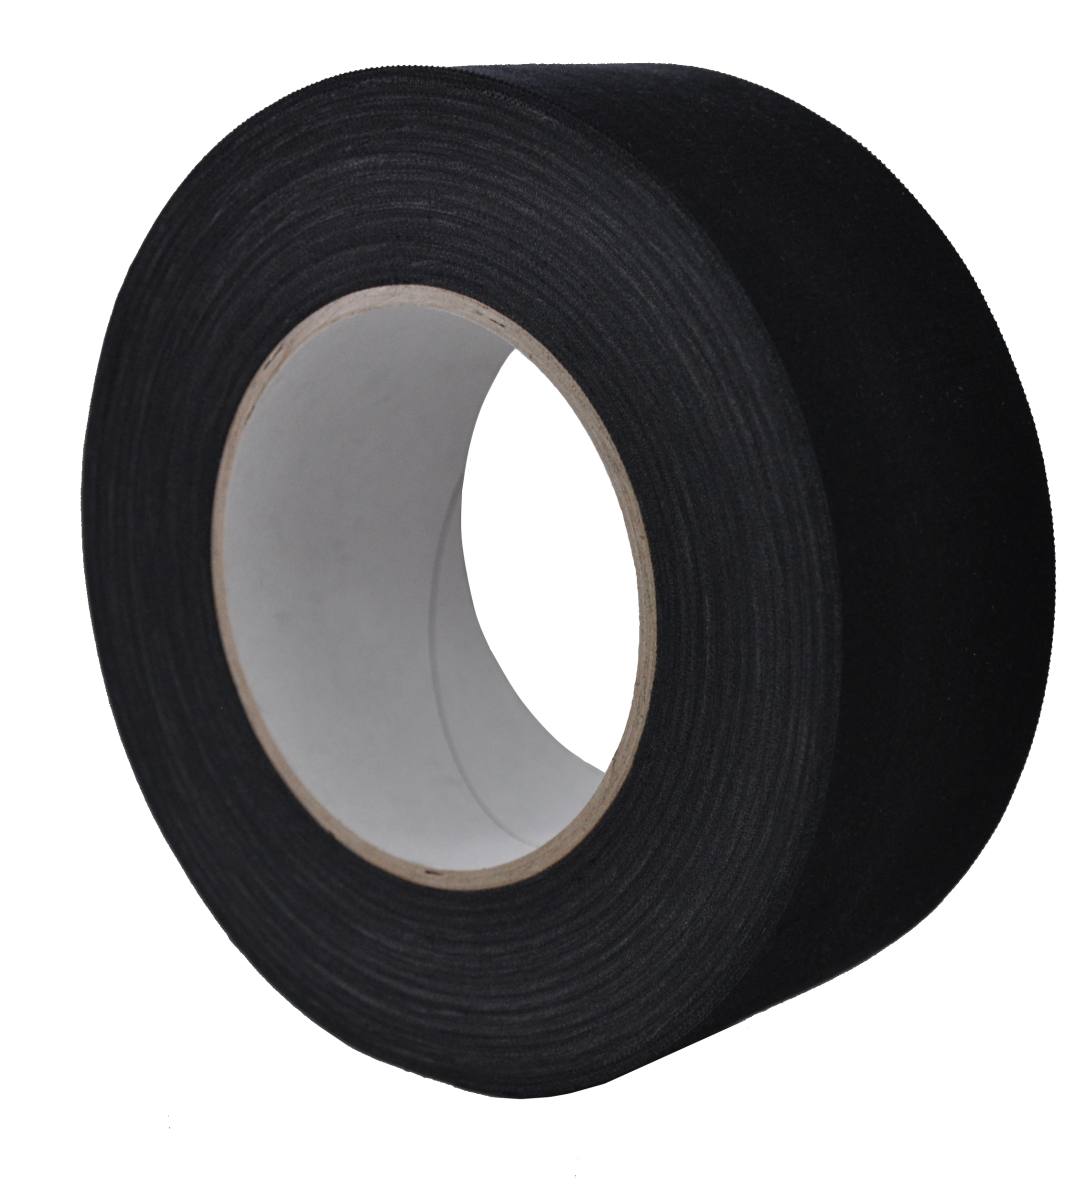 S-K-S 970 Raw fabric adhesive tape, 75 mm x 50 m, black, 0.240 mm